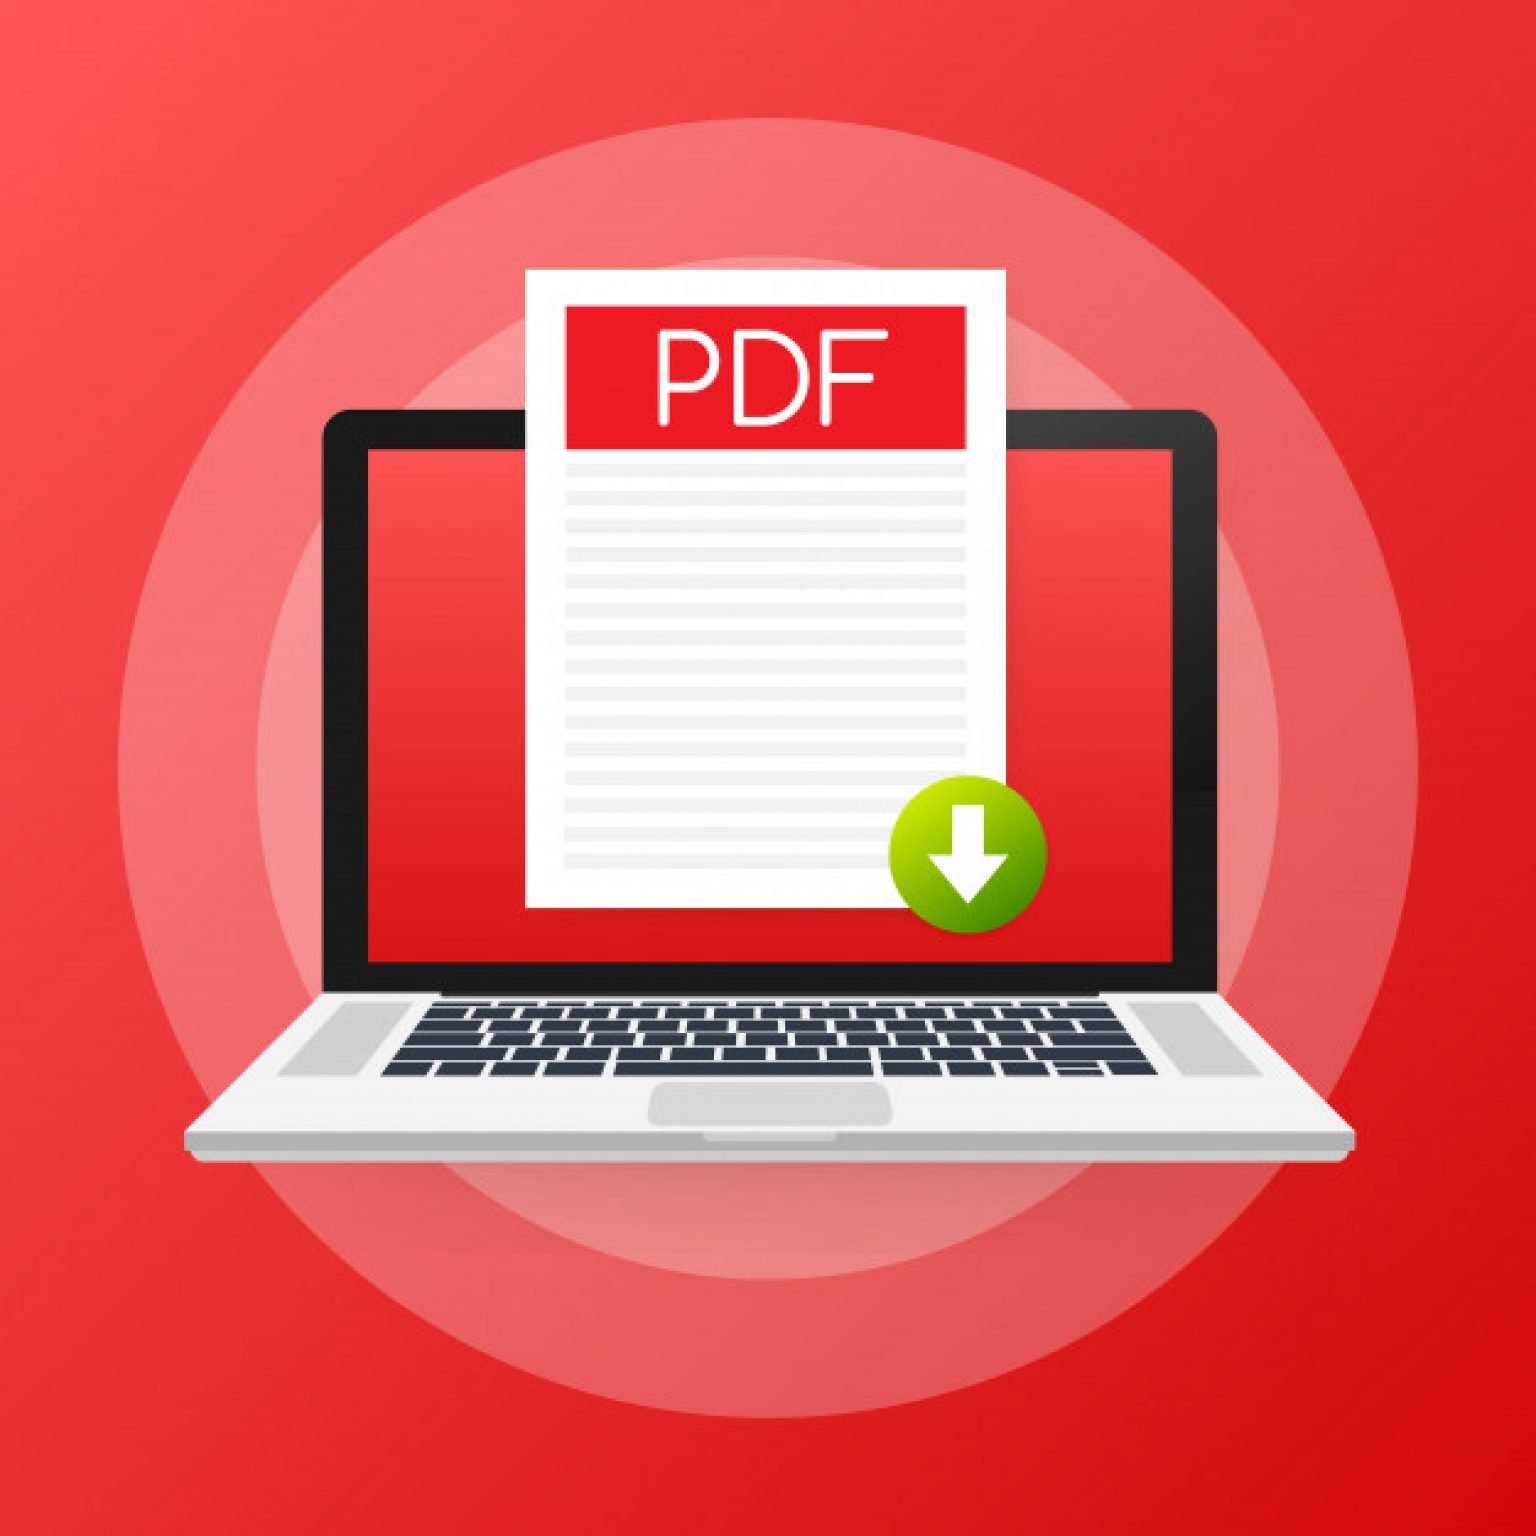 for apple download Automatic PDF Processor 1.28